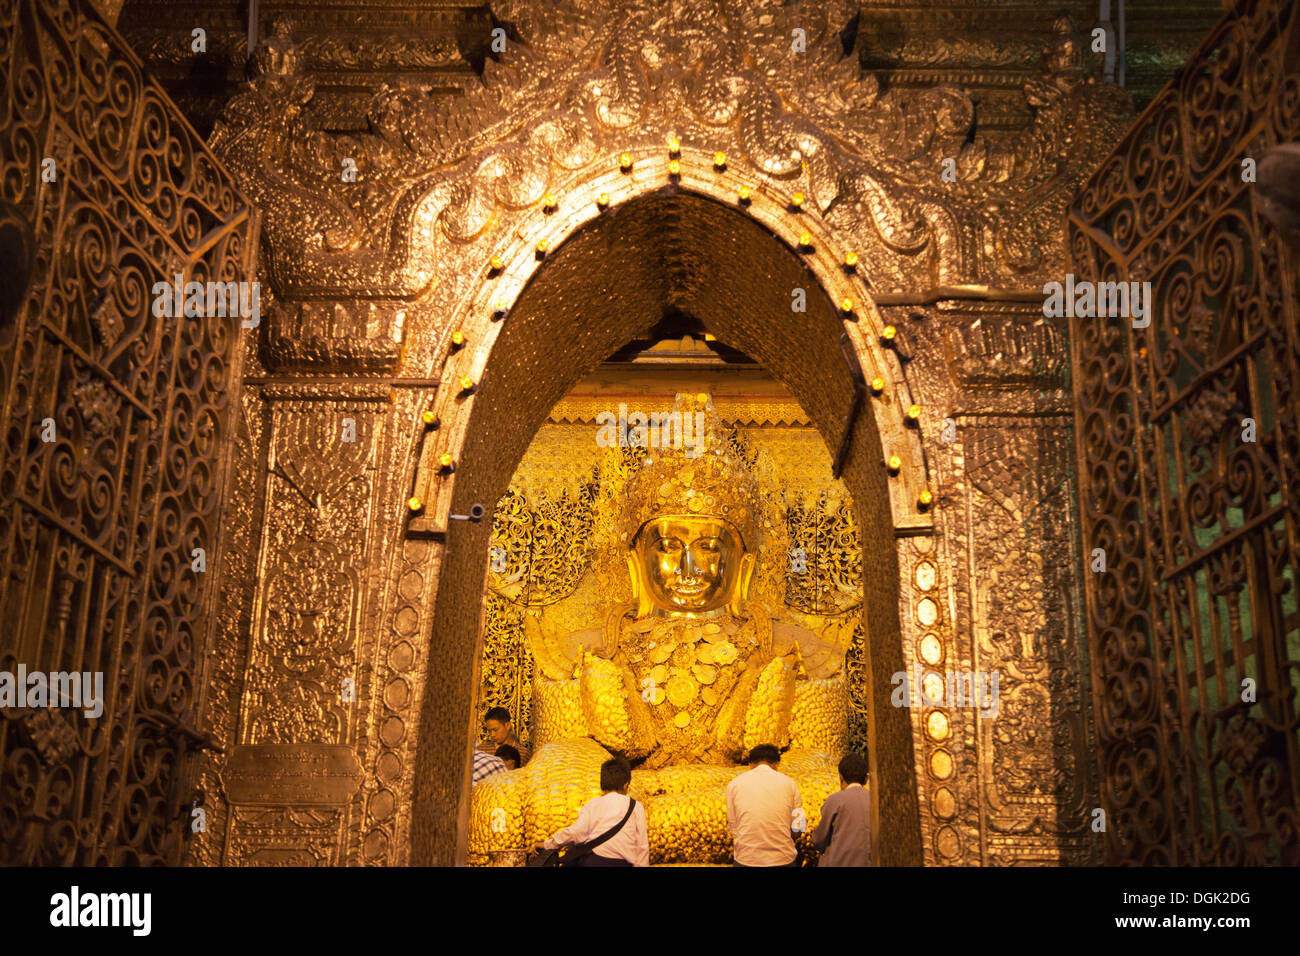 Der berühmte Blattgold-verkrusteten Buddha in der Mahamuni Pagode in Mandalay in Myanmar. Stockfoto